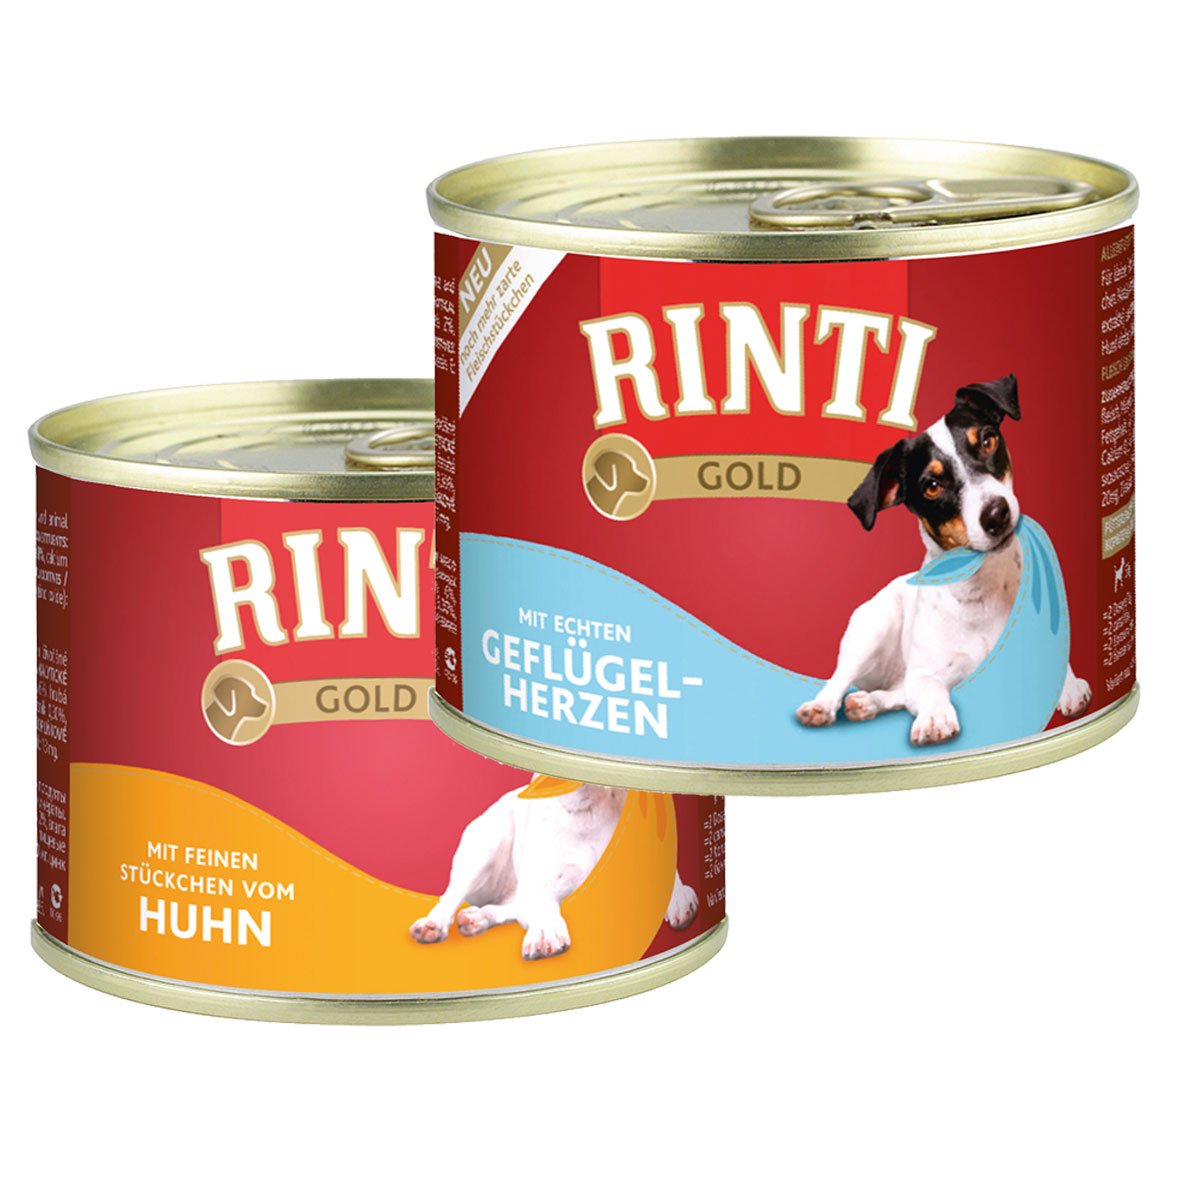 Rinti Gold Mix aus Geflügelherzen & Huhnstückchen 24x185g